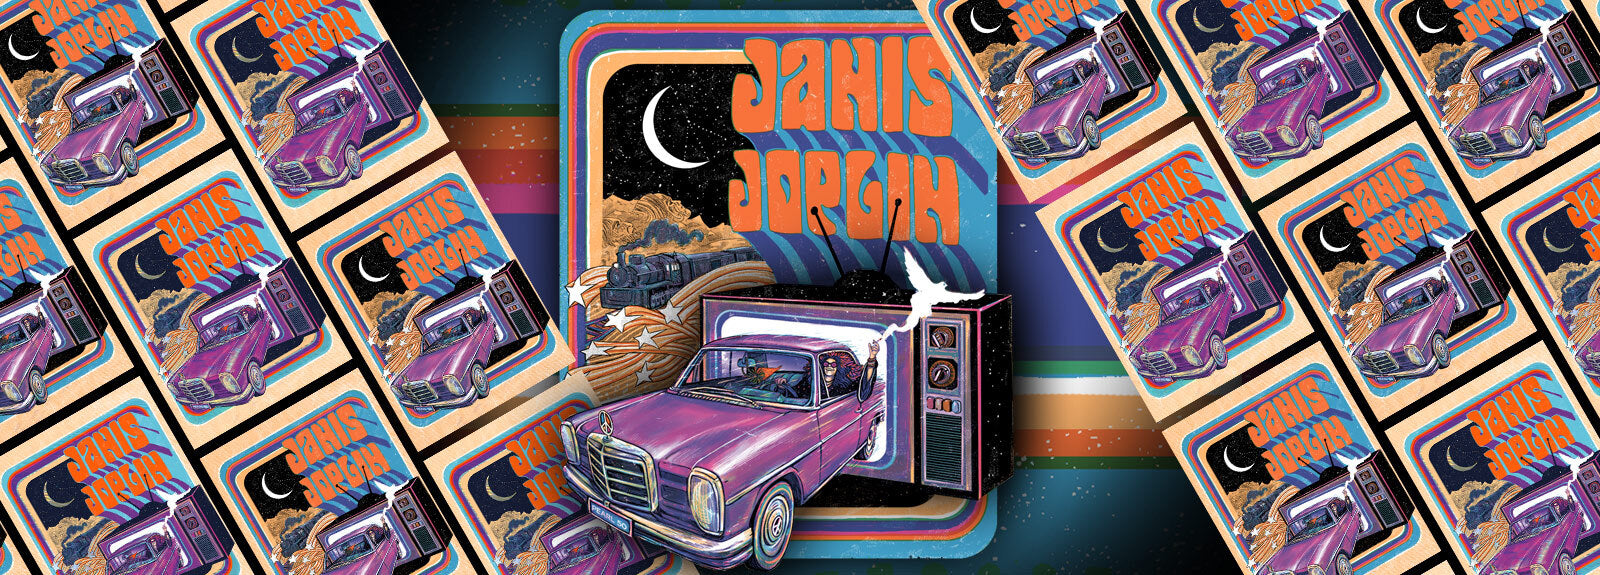 Behind the Poster: Janis Joplin Pearl 50th Anniversary